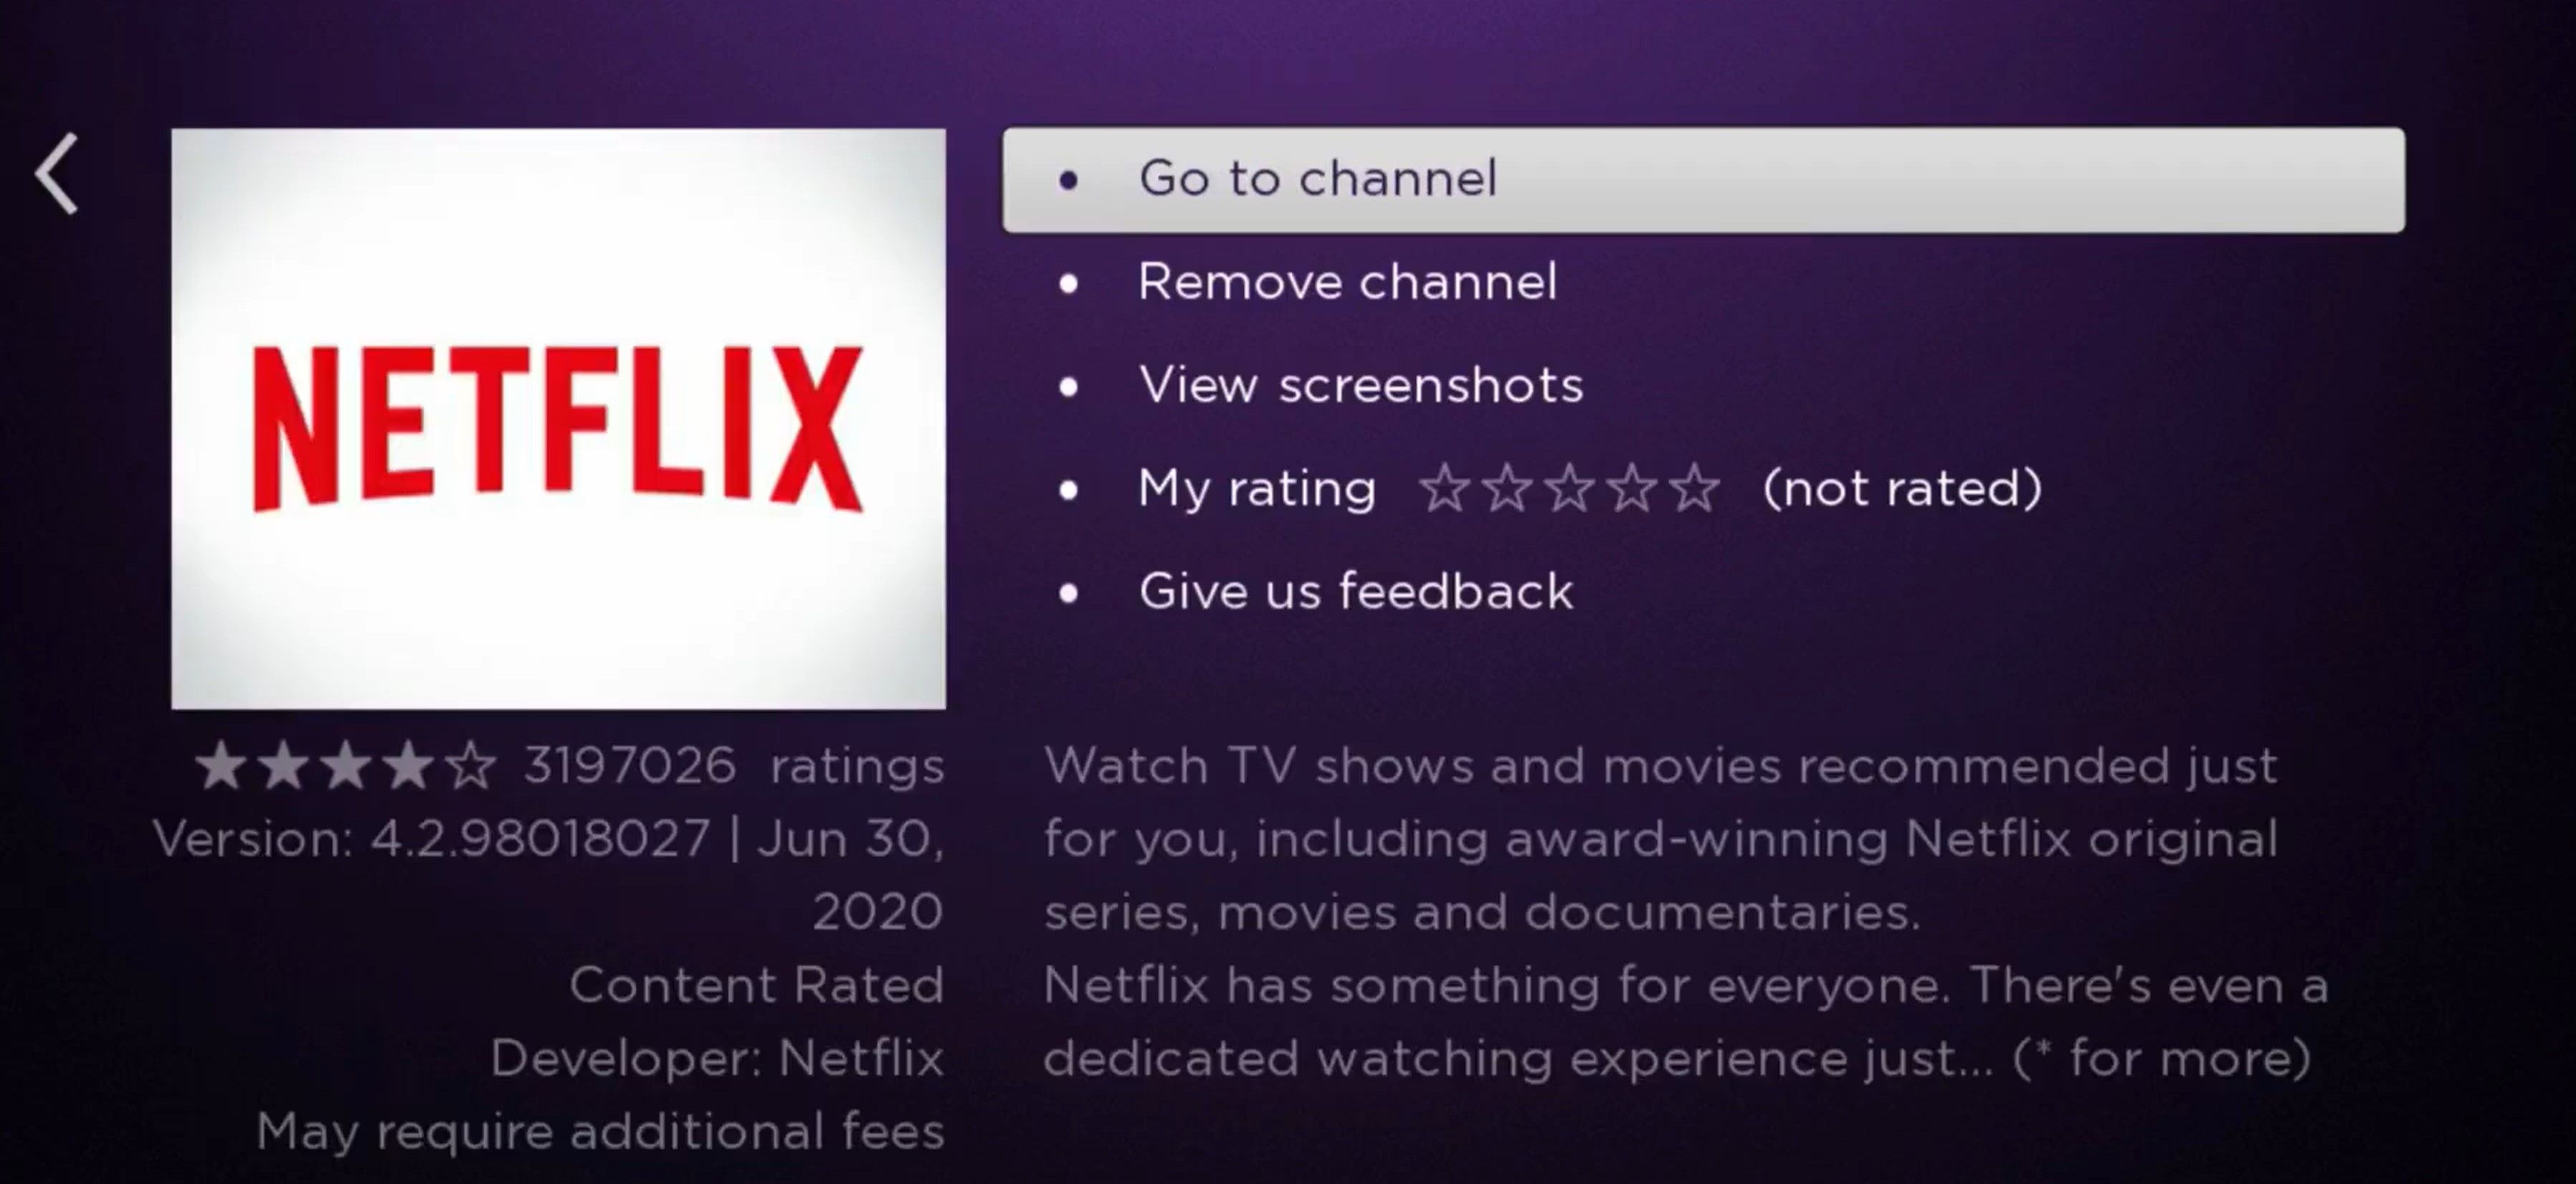 netflix app download - Come installare Netflix sulla tua TV